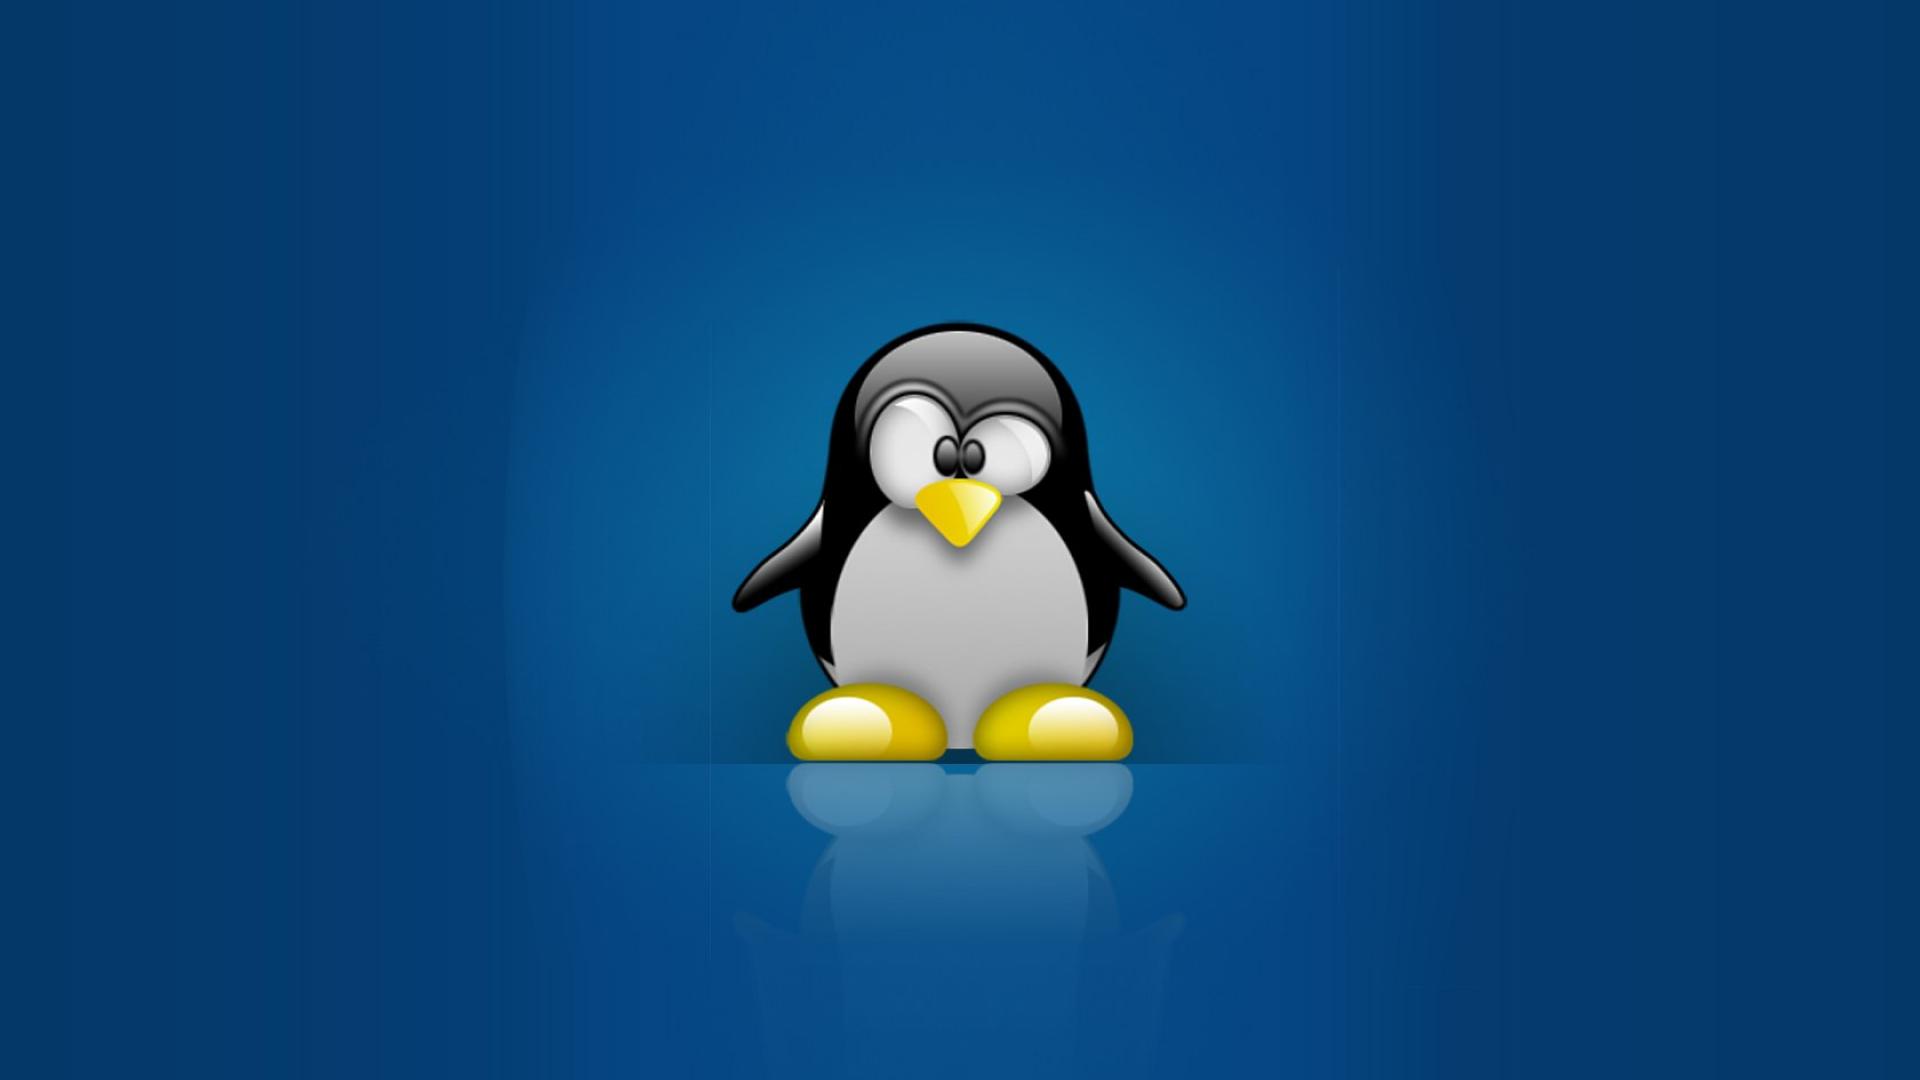 linux tux penguins computer hd wallpaper - (#19316) - HQ Desktop ...